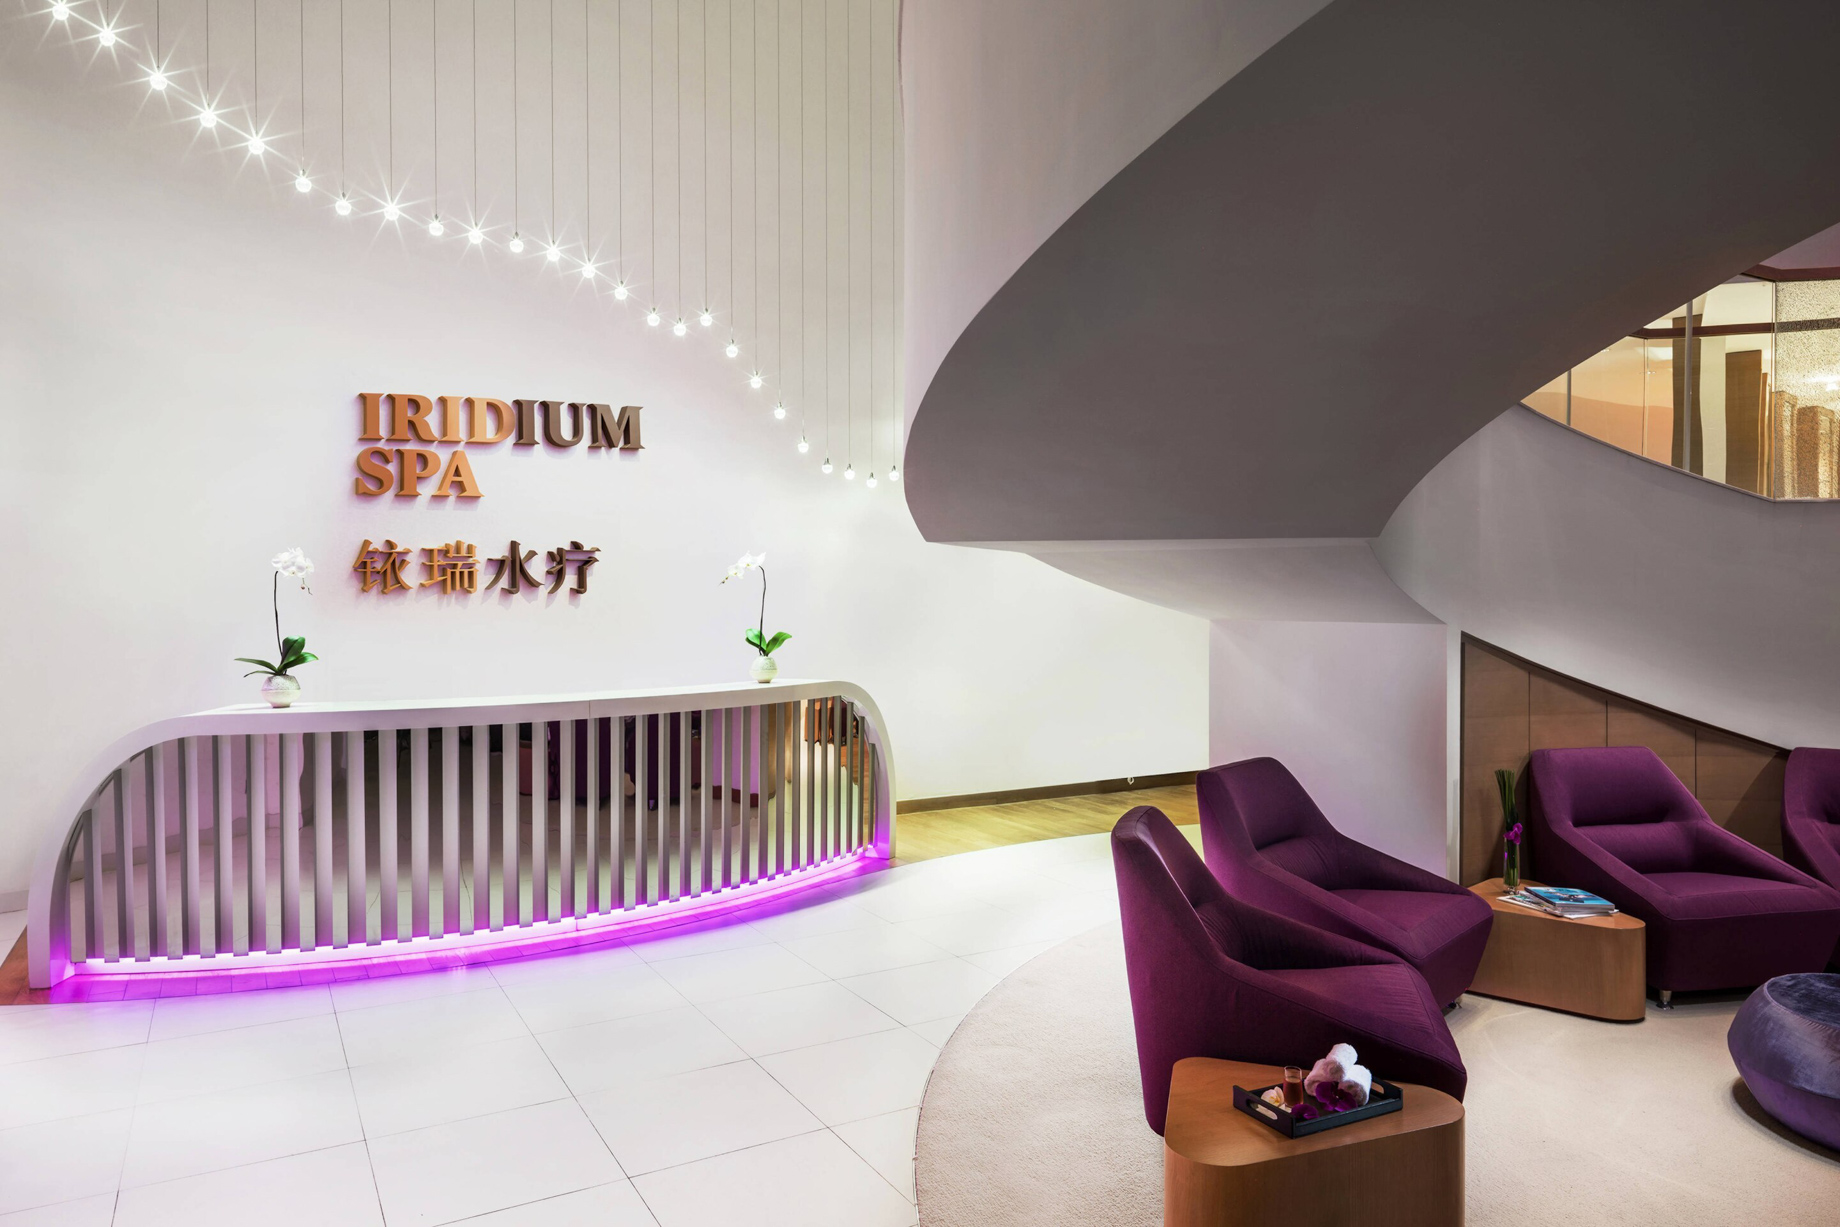 The St. Regis Chengdu Hotel – Chengdu, Sichuan, China – Iridium Spa Reception